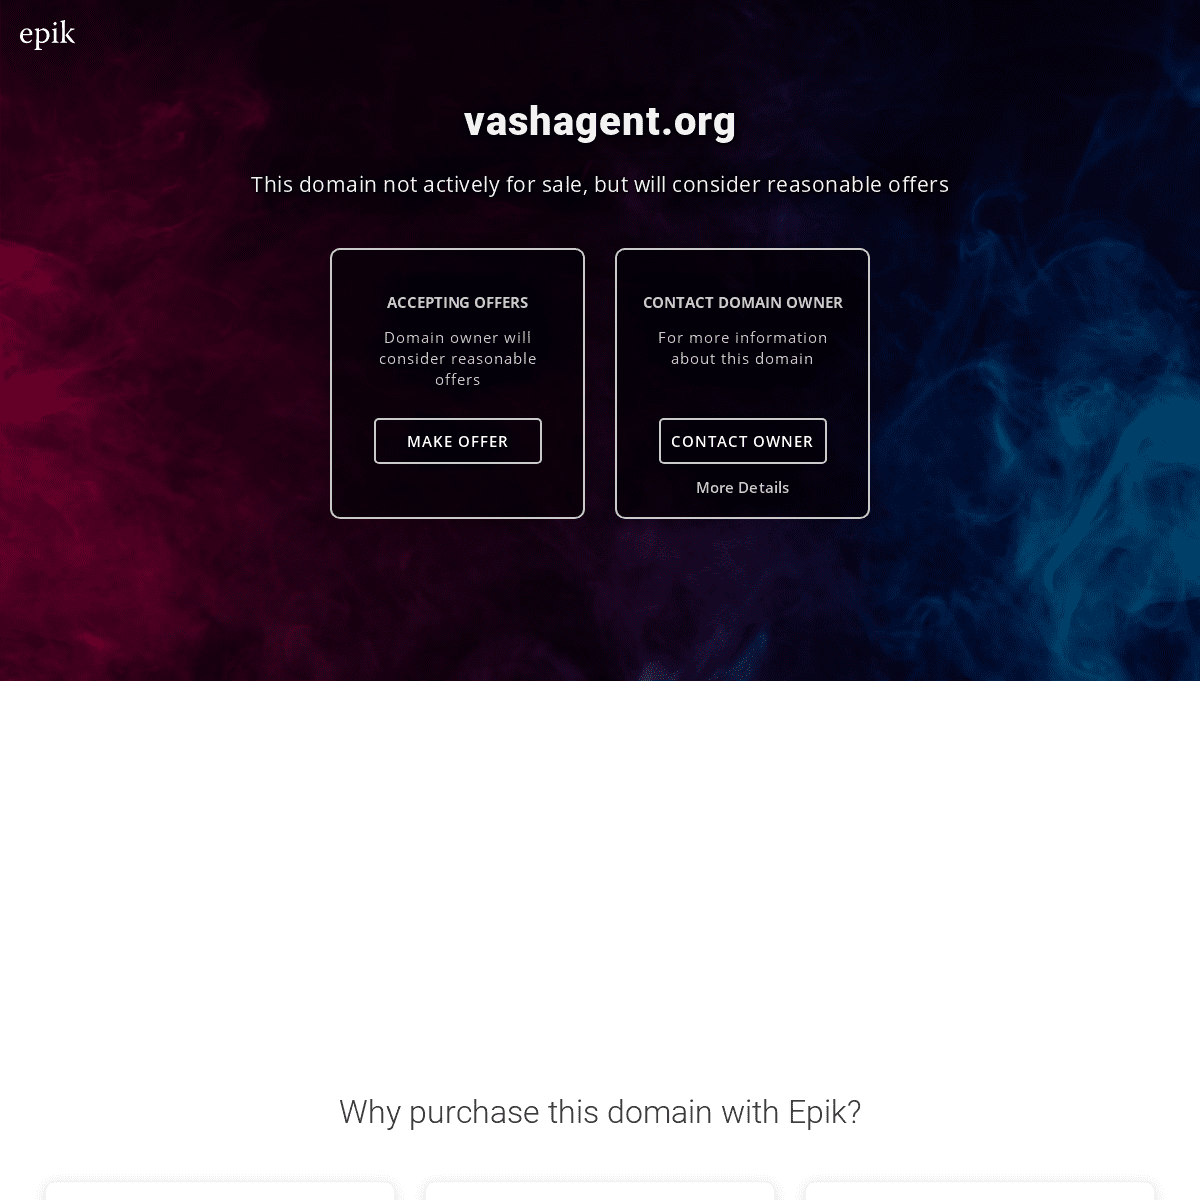 A complete backup of https://vashagent.org